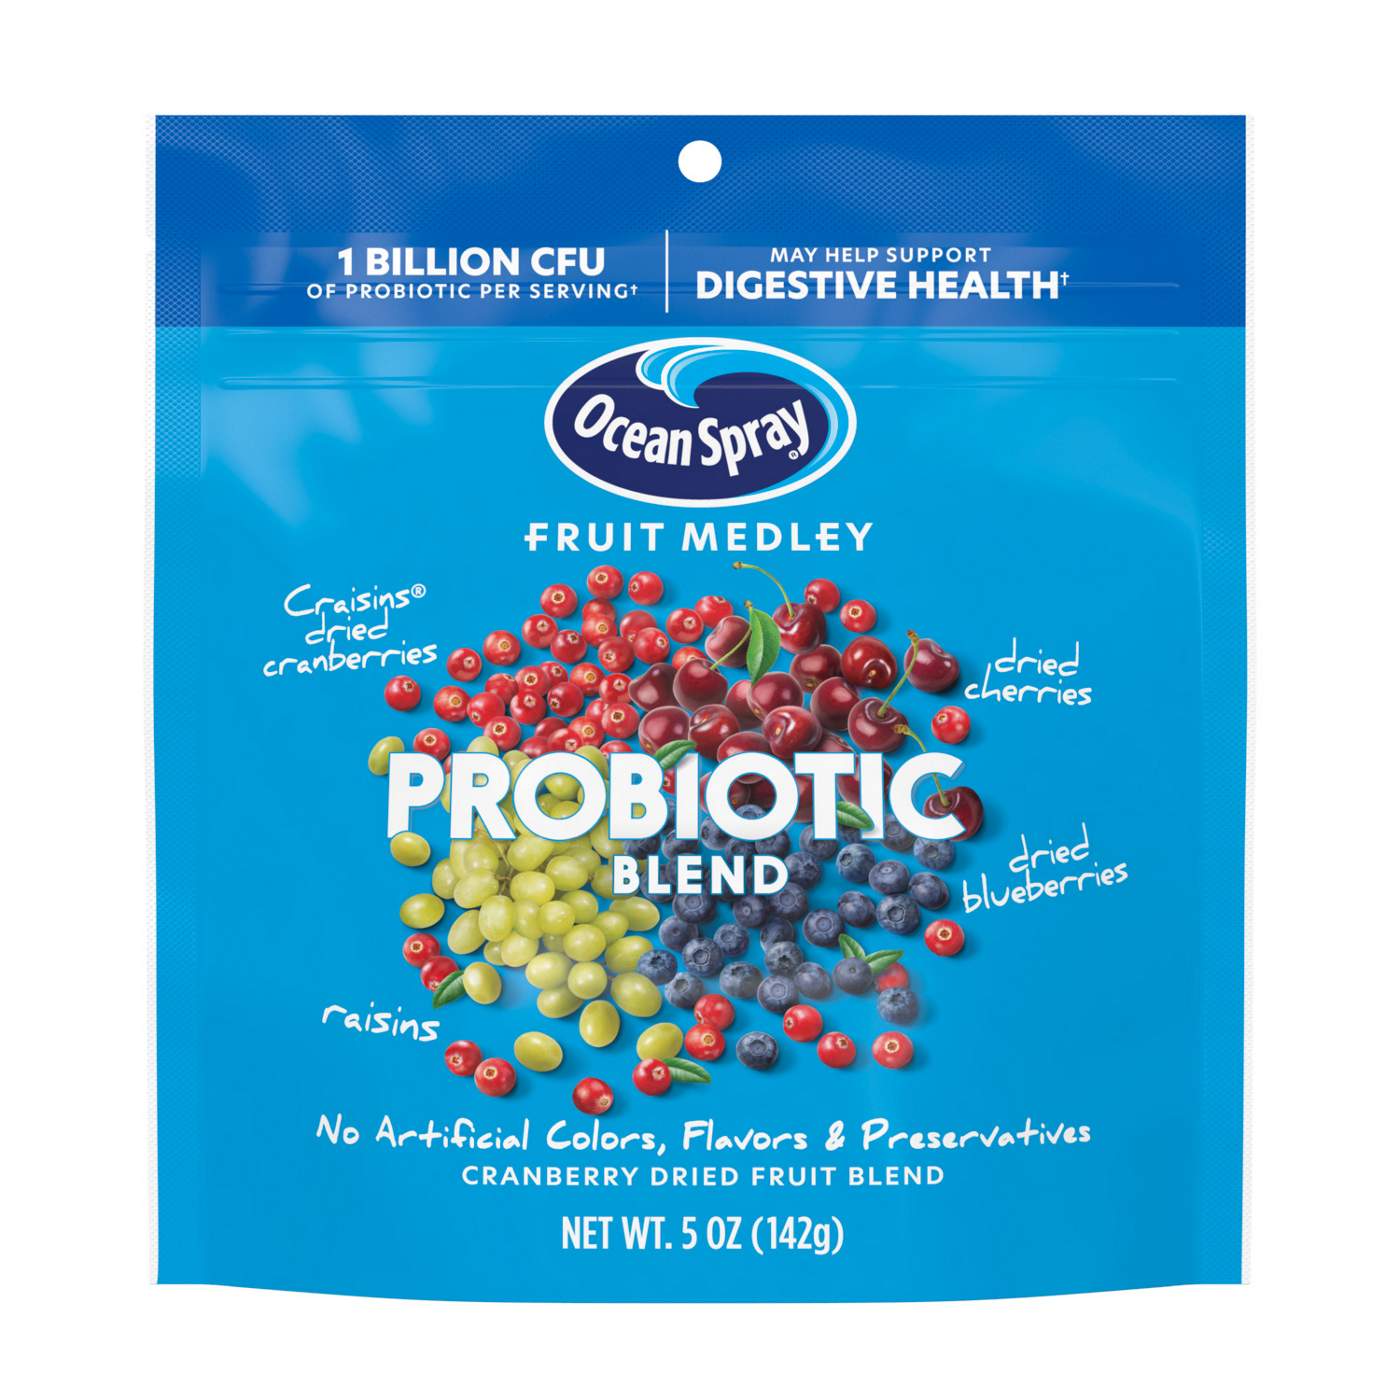 Ocean Spray Probiotic Blend Fruit Medley; image 1 of 2